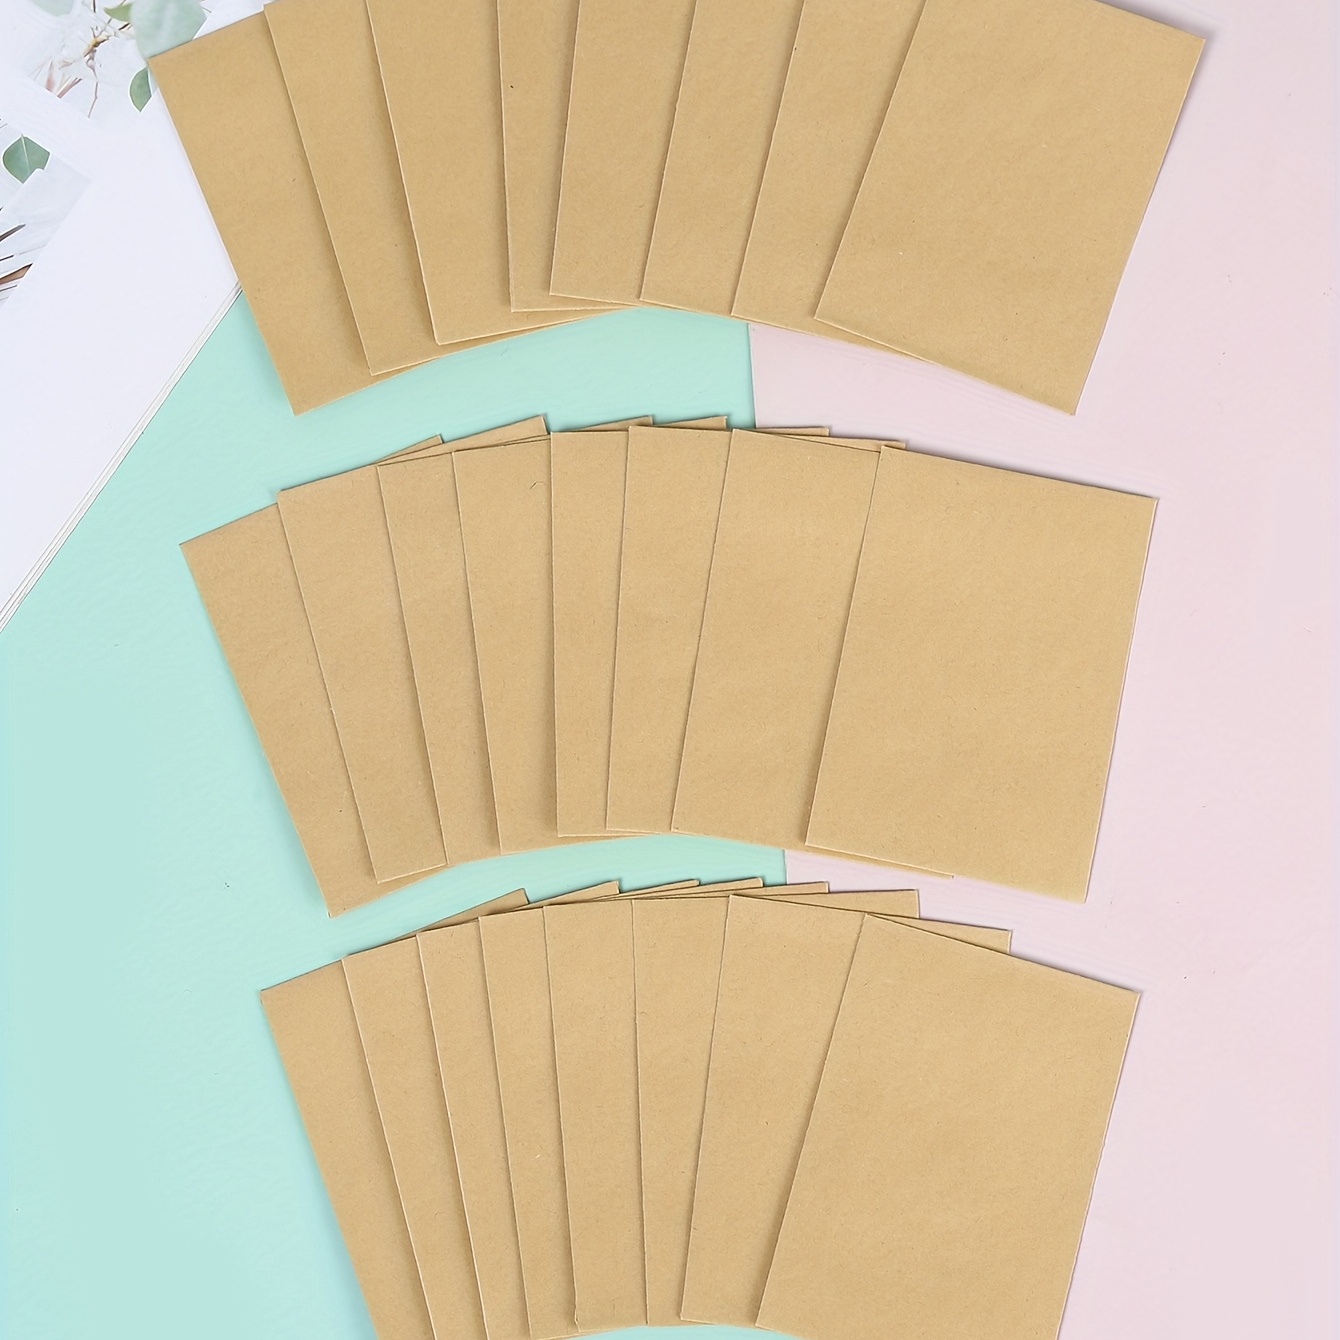 60Pcs-Set Petites Enveloppes Marron Enveloppes Kraft Vintage